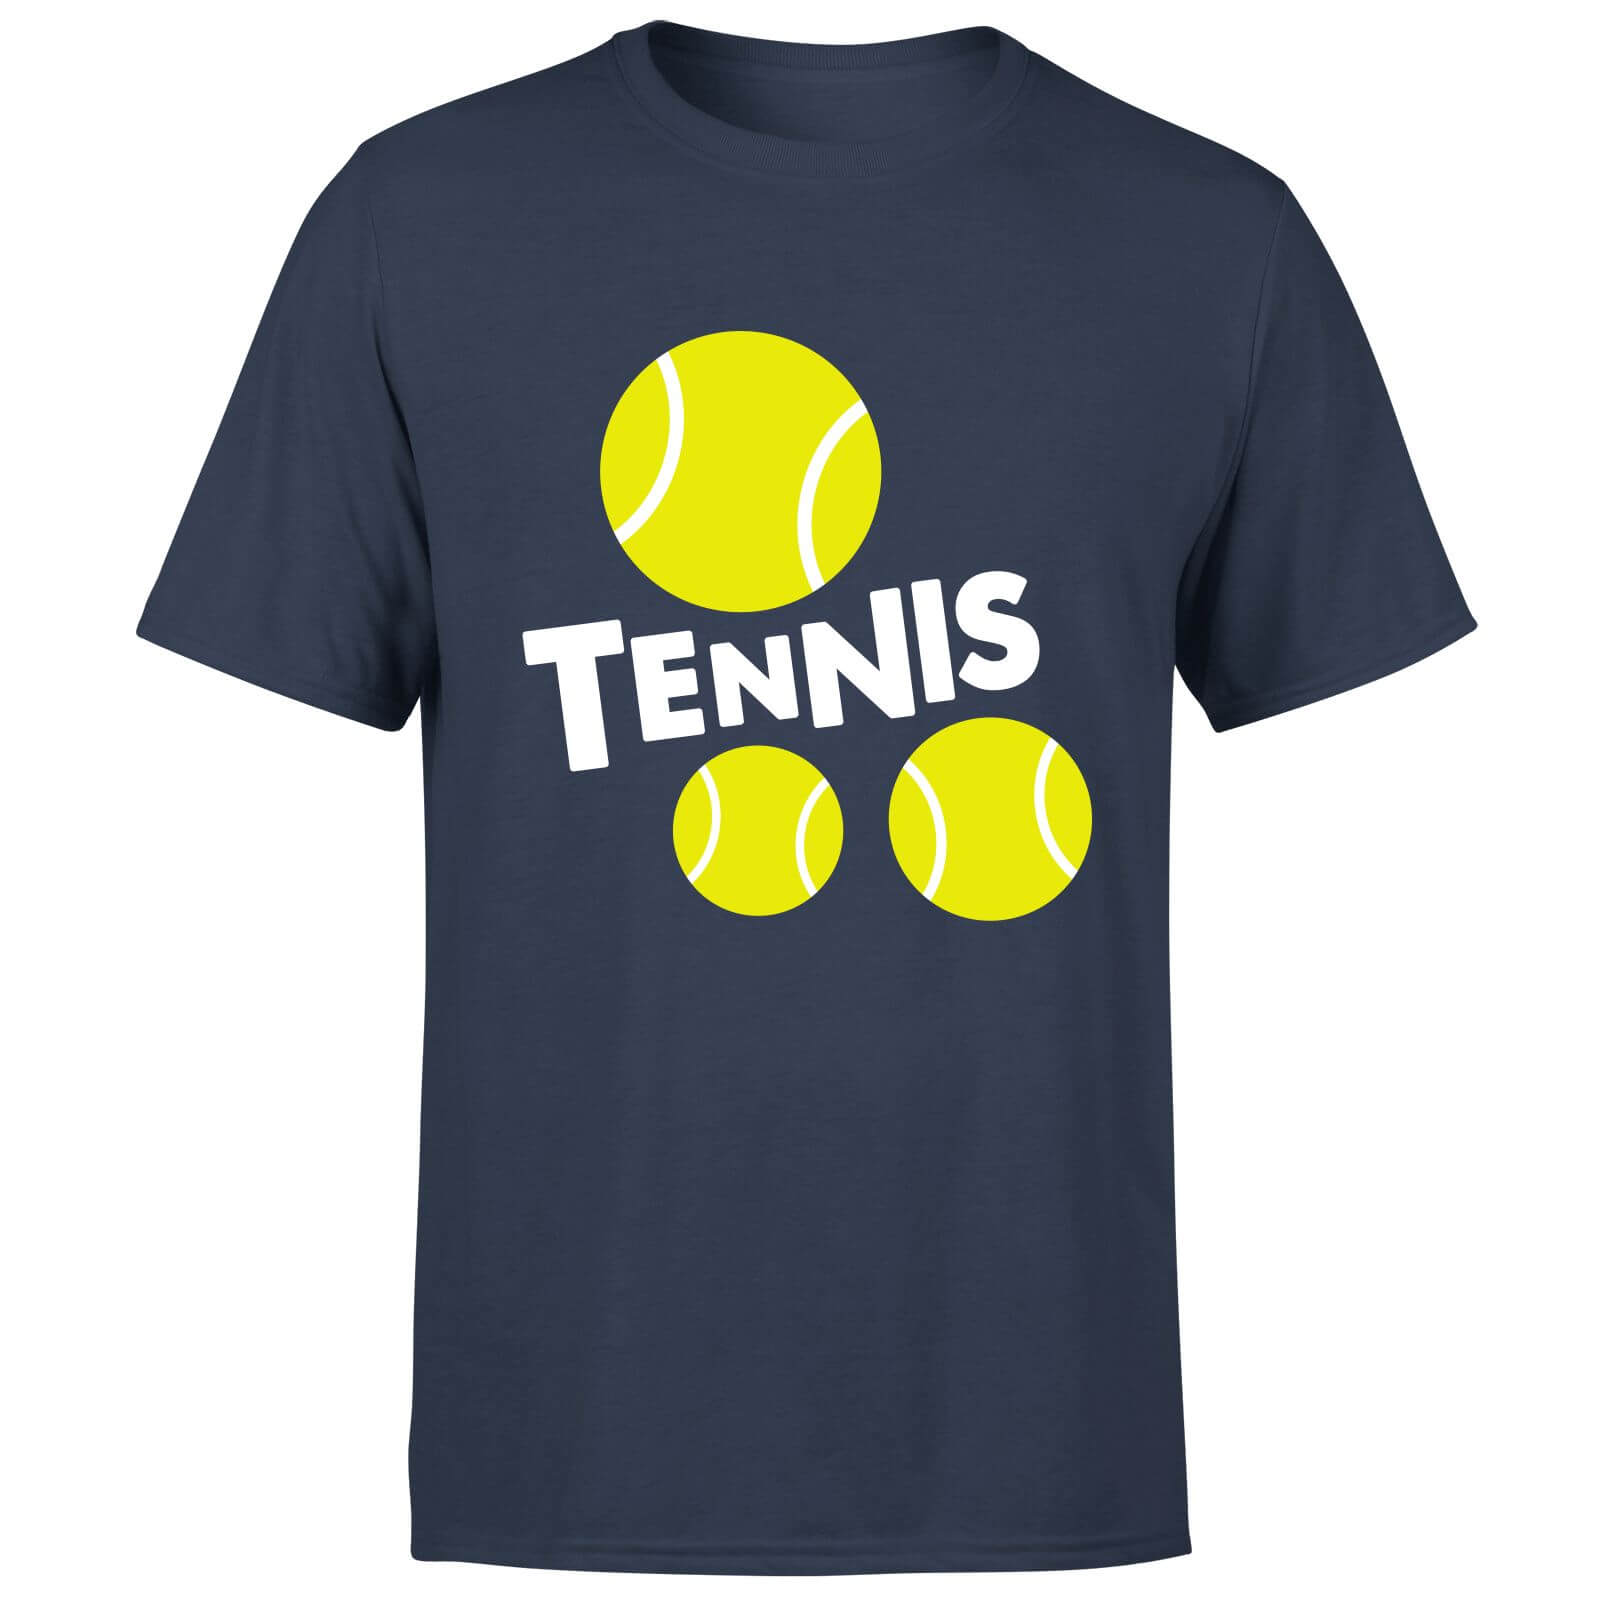 Tennis Balls T-Shirt - Navy - M - Navy